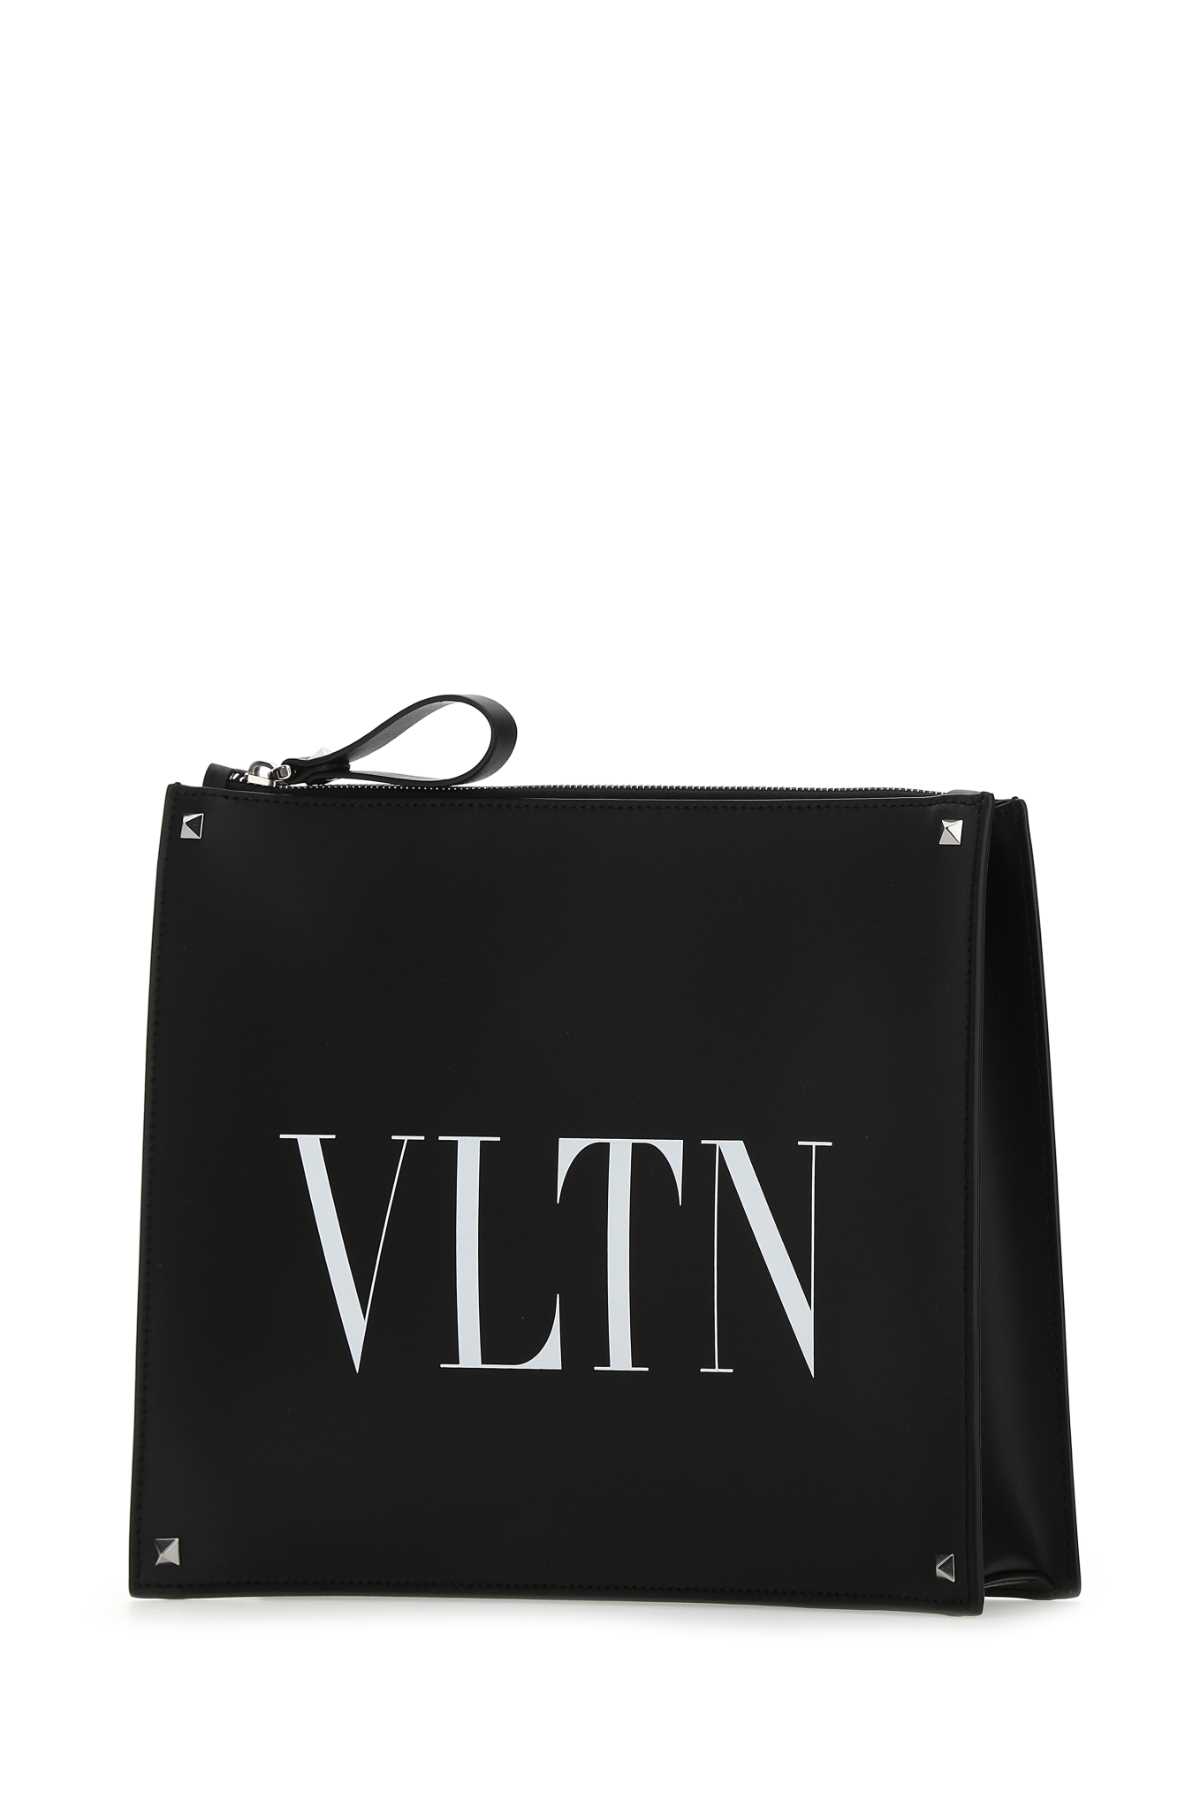 Shop Valentino Black Leather Vltn Clutch In Nerobianco